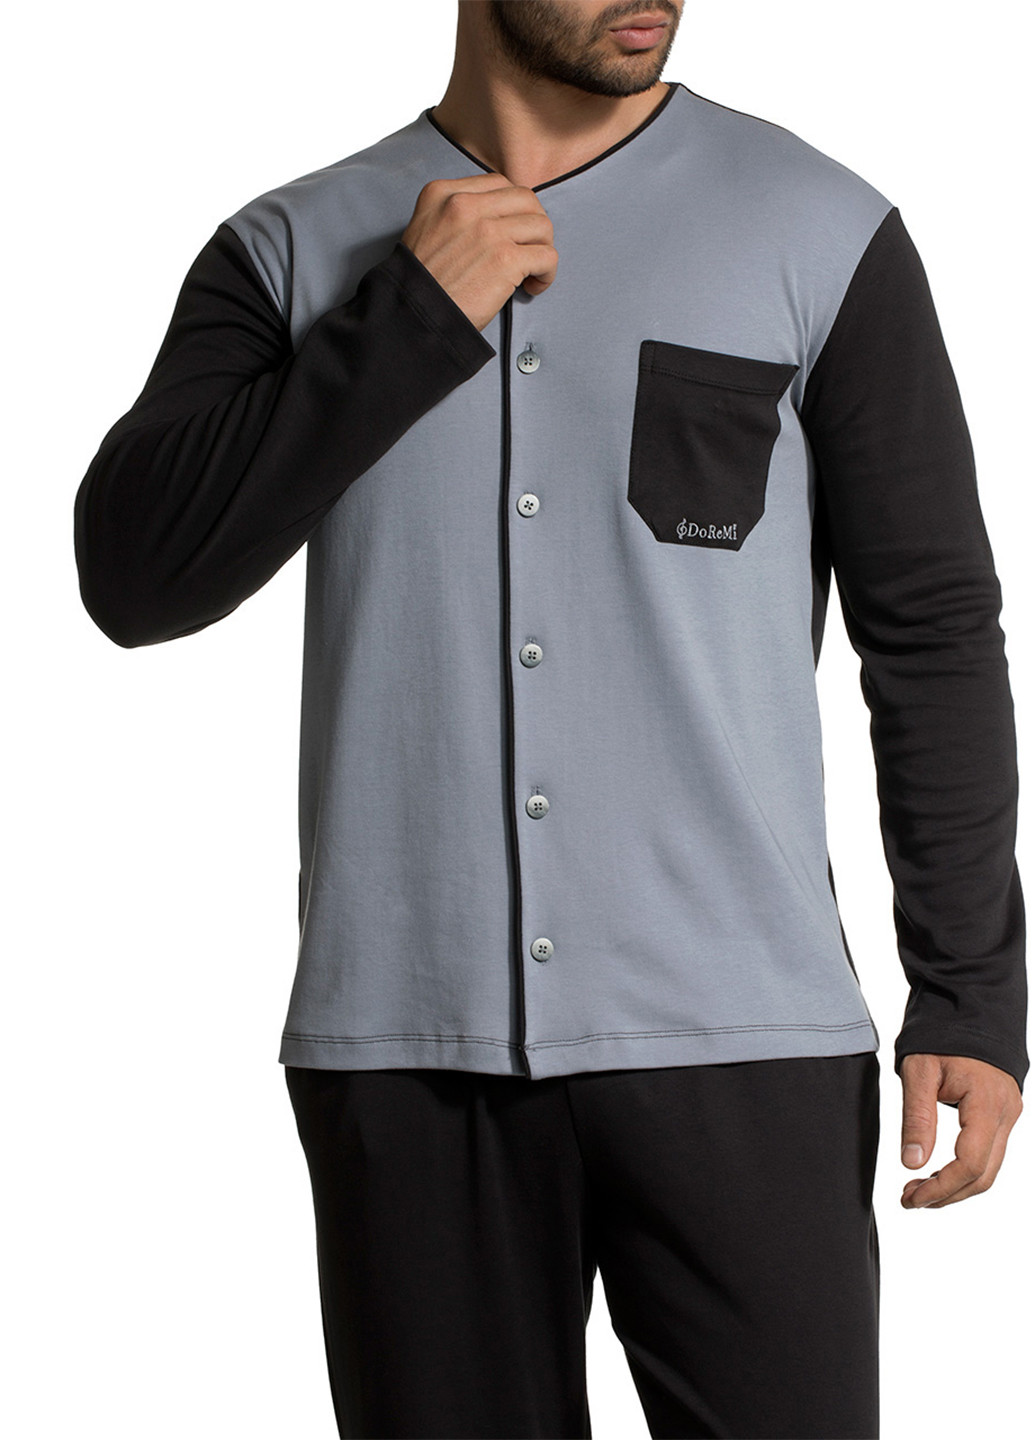 Пижама (кофта, брюки) DoReMi кофта + брюки однотонная чёрно-белую домашняя хлопок